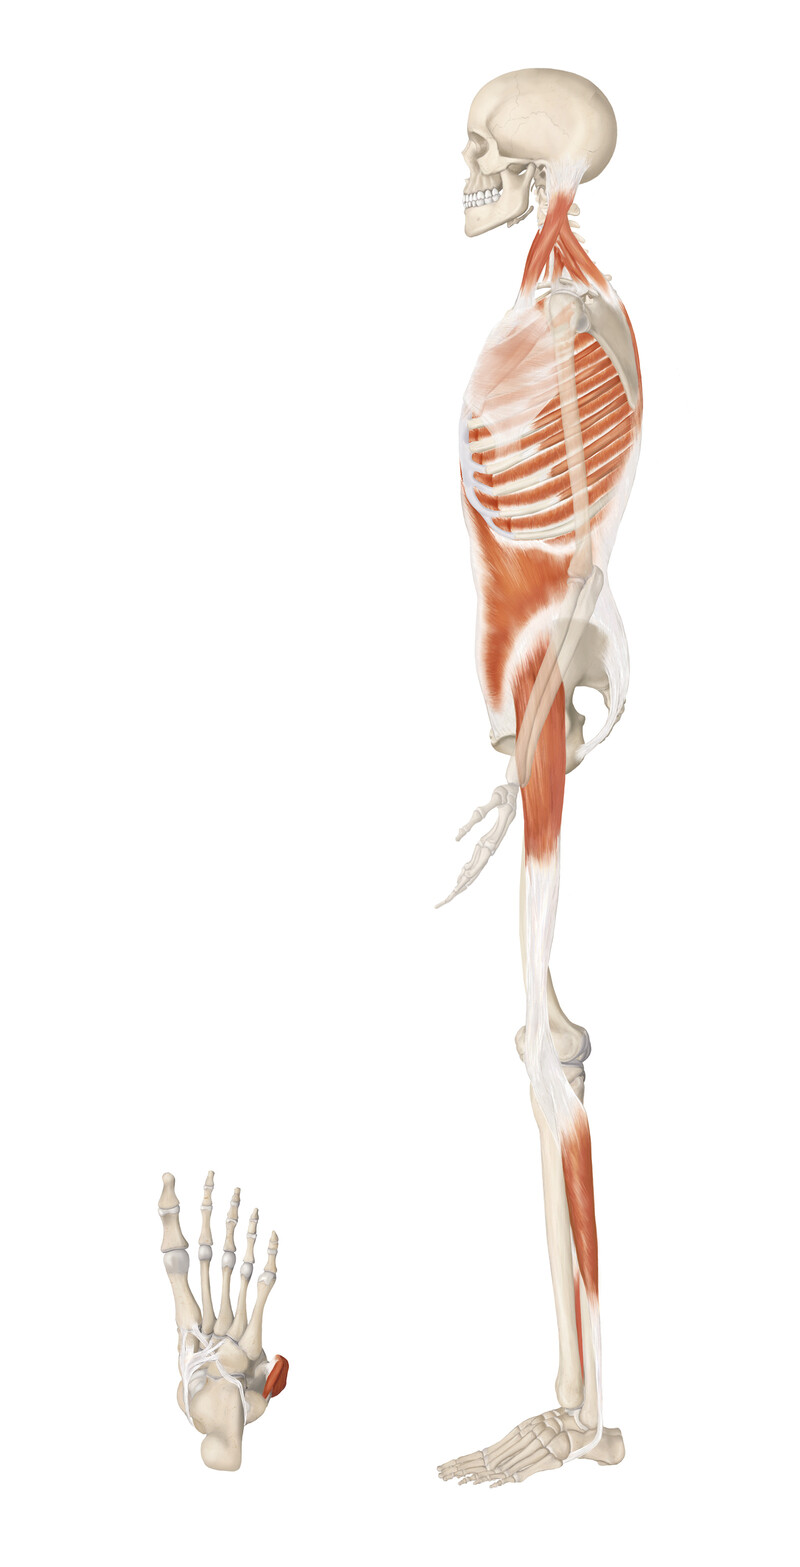 oculus-illustration-medizin-anatomie-osteopathie-faszialkette-3